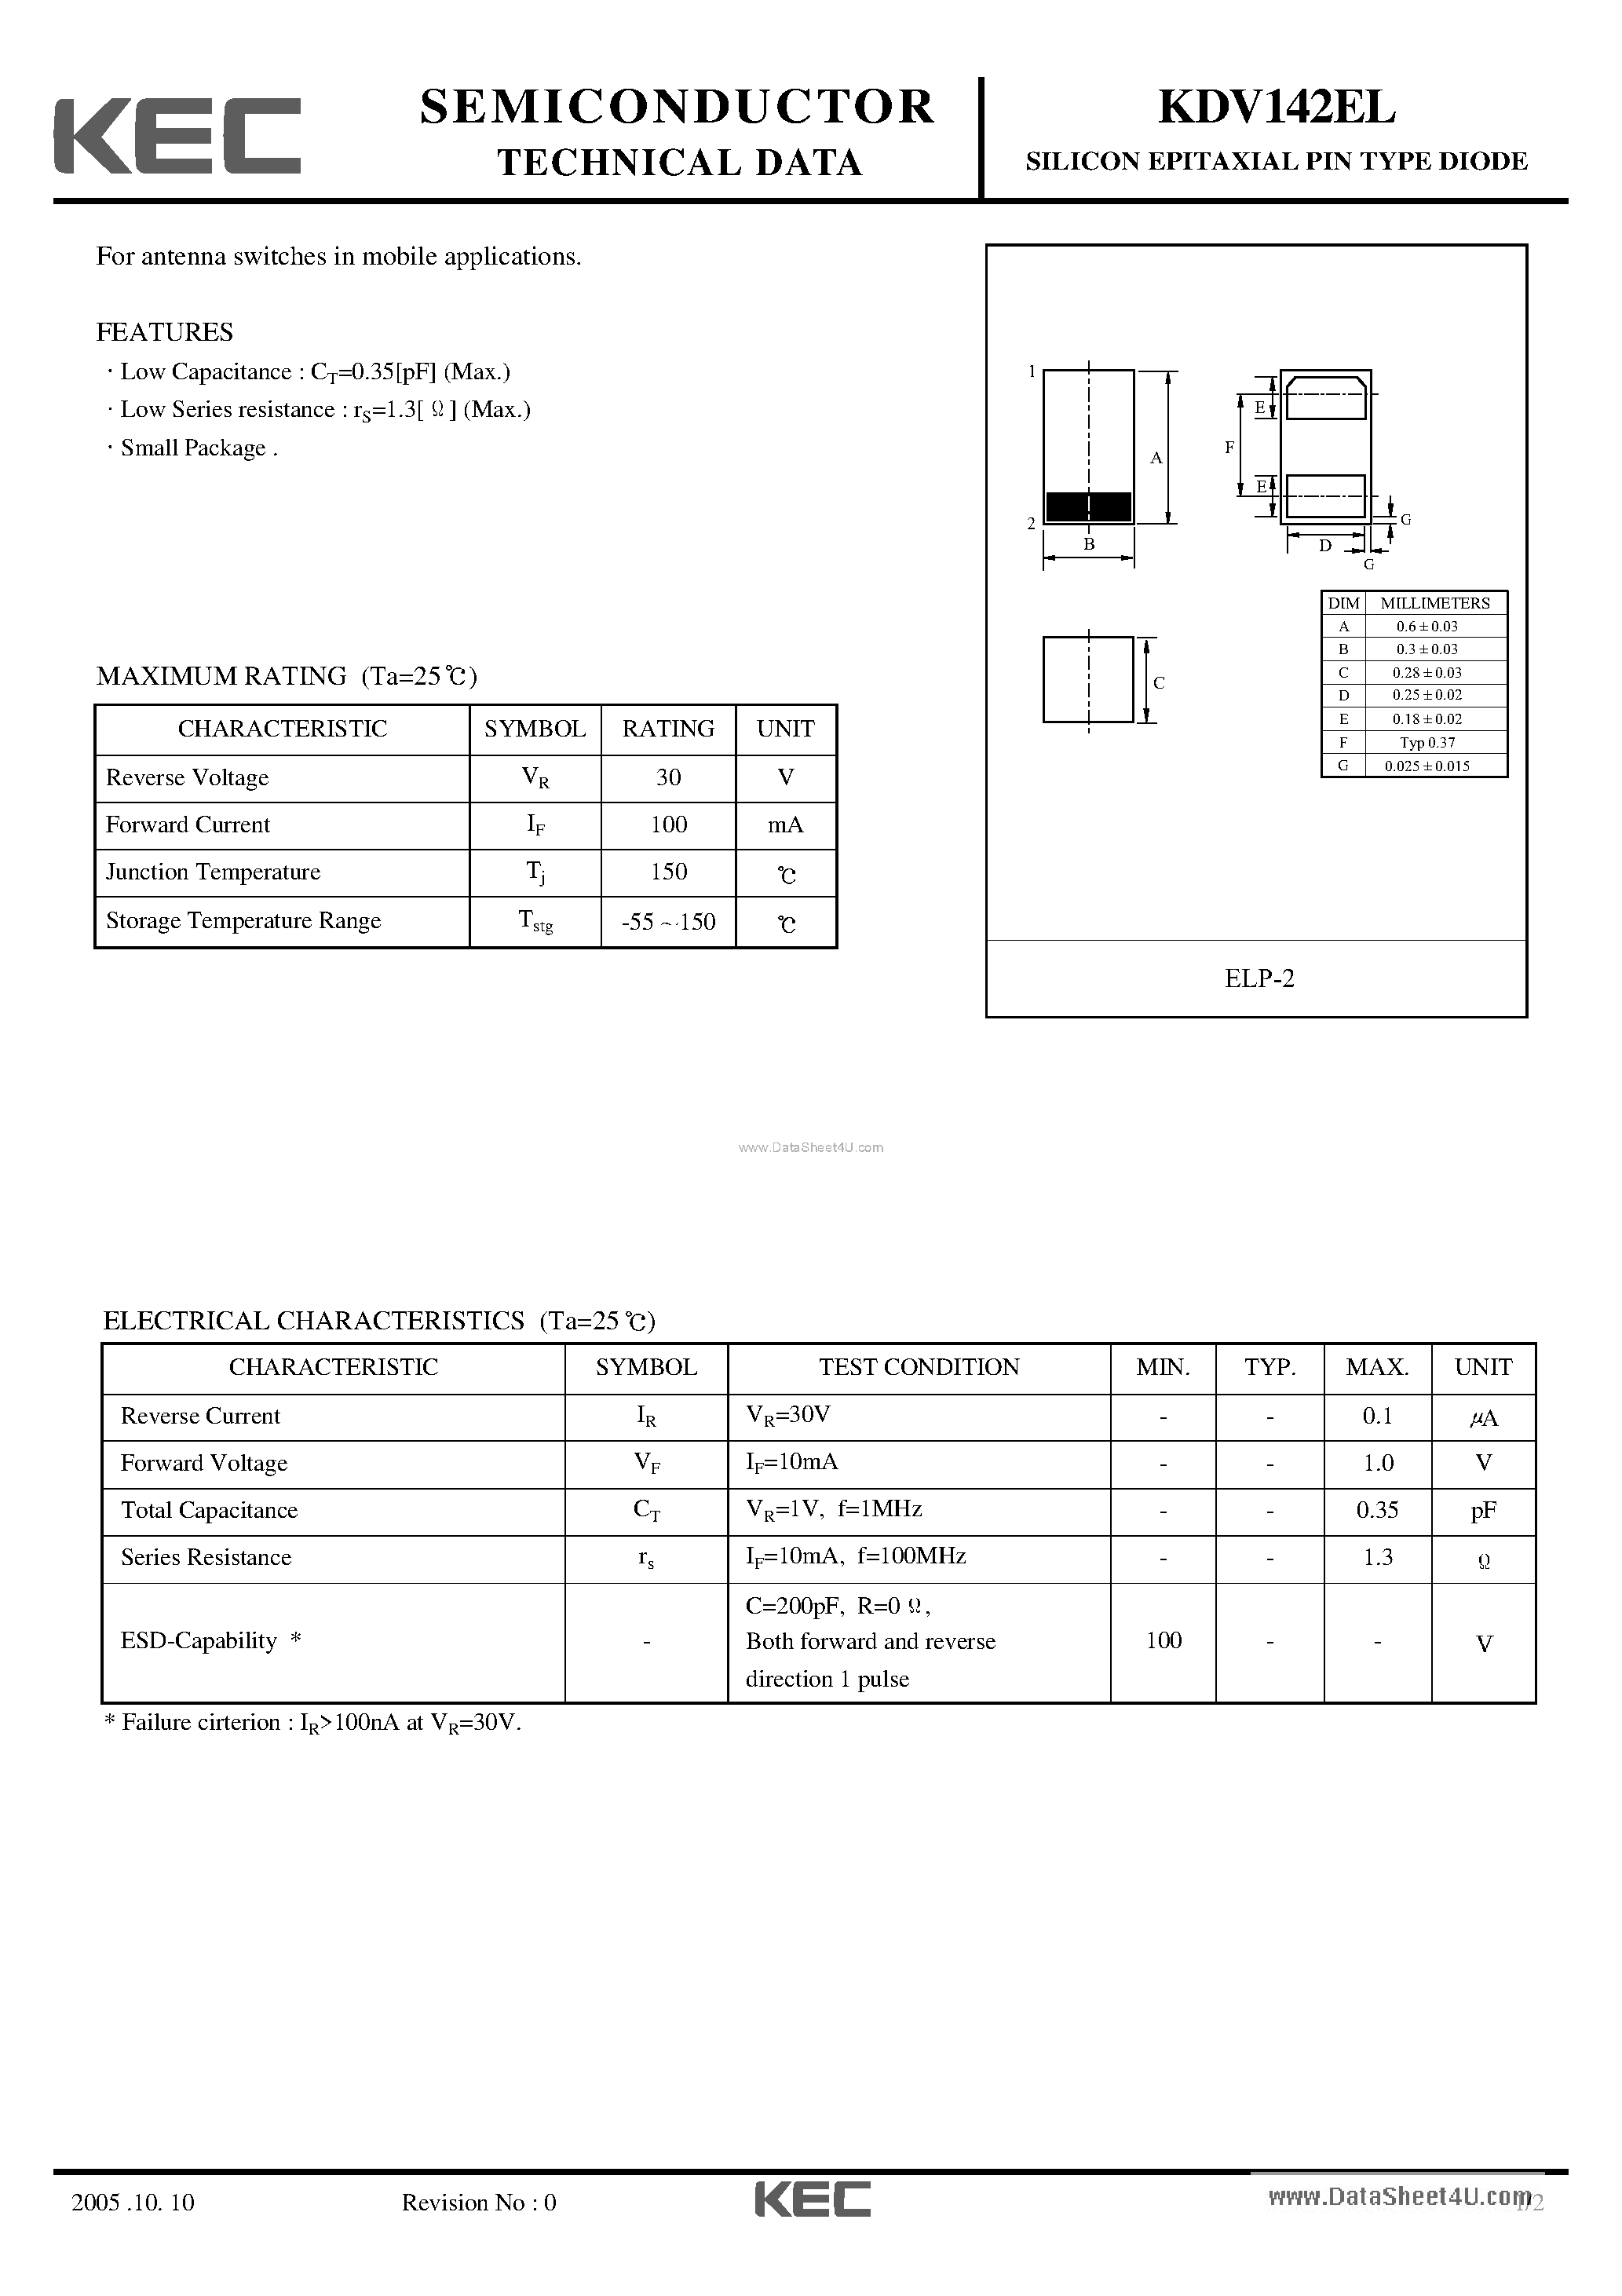 Datasheet KDV142EL - Silicon Epitaxial Pin Type Diode page 1